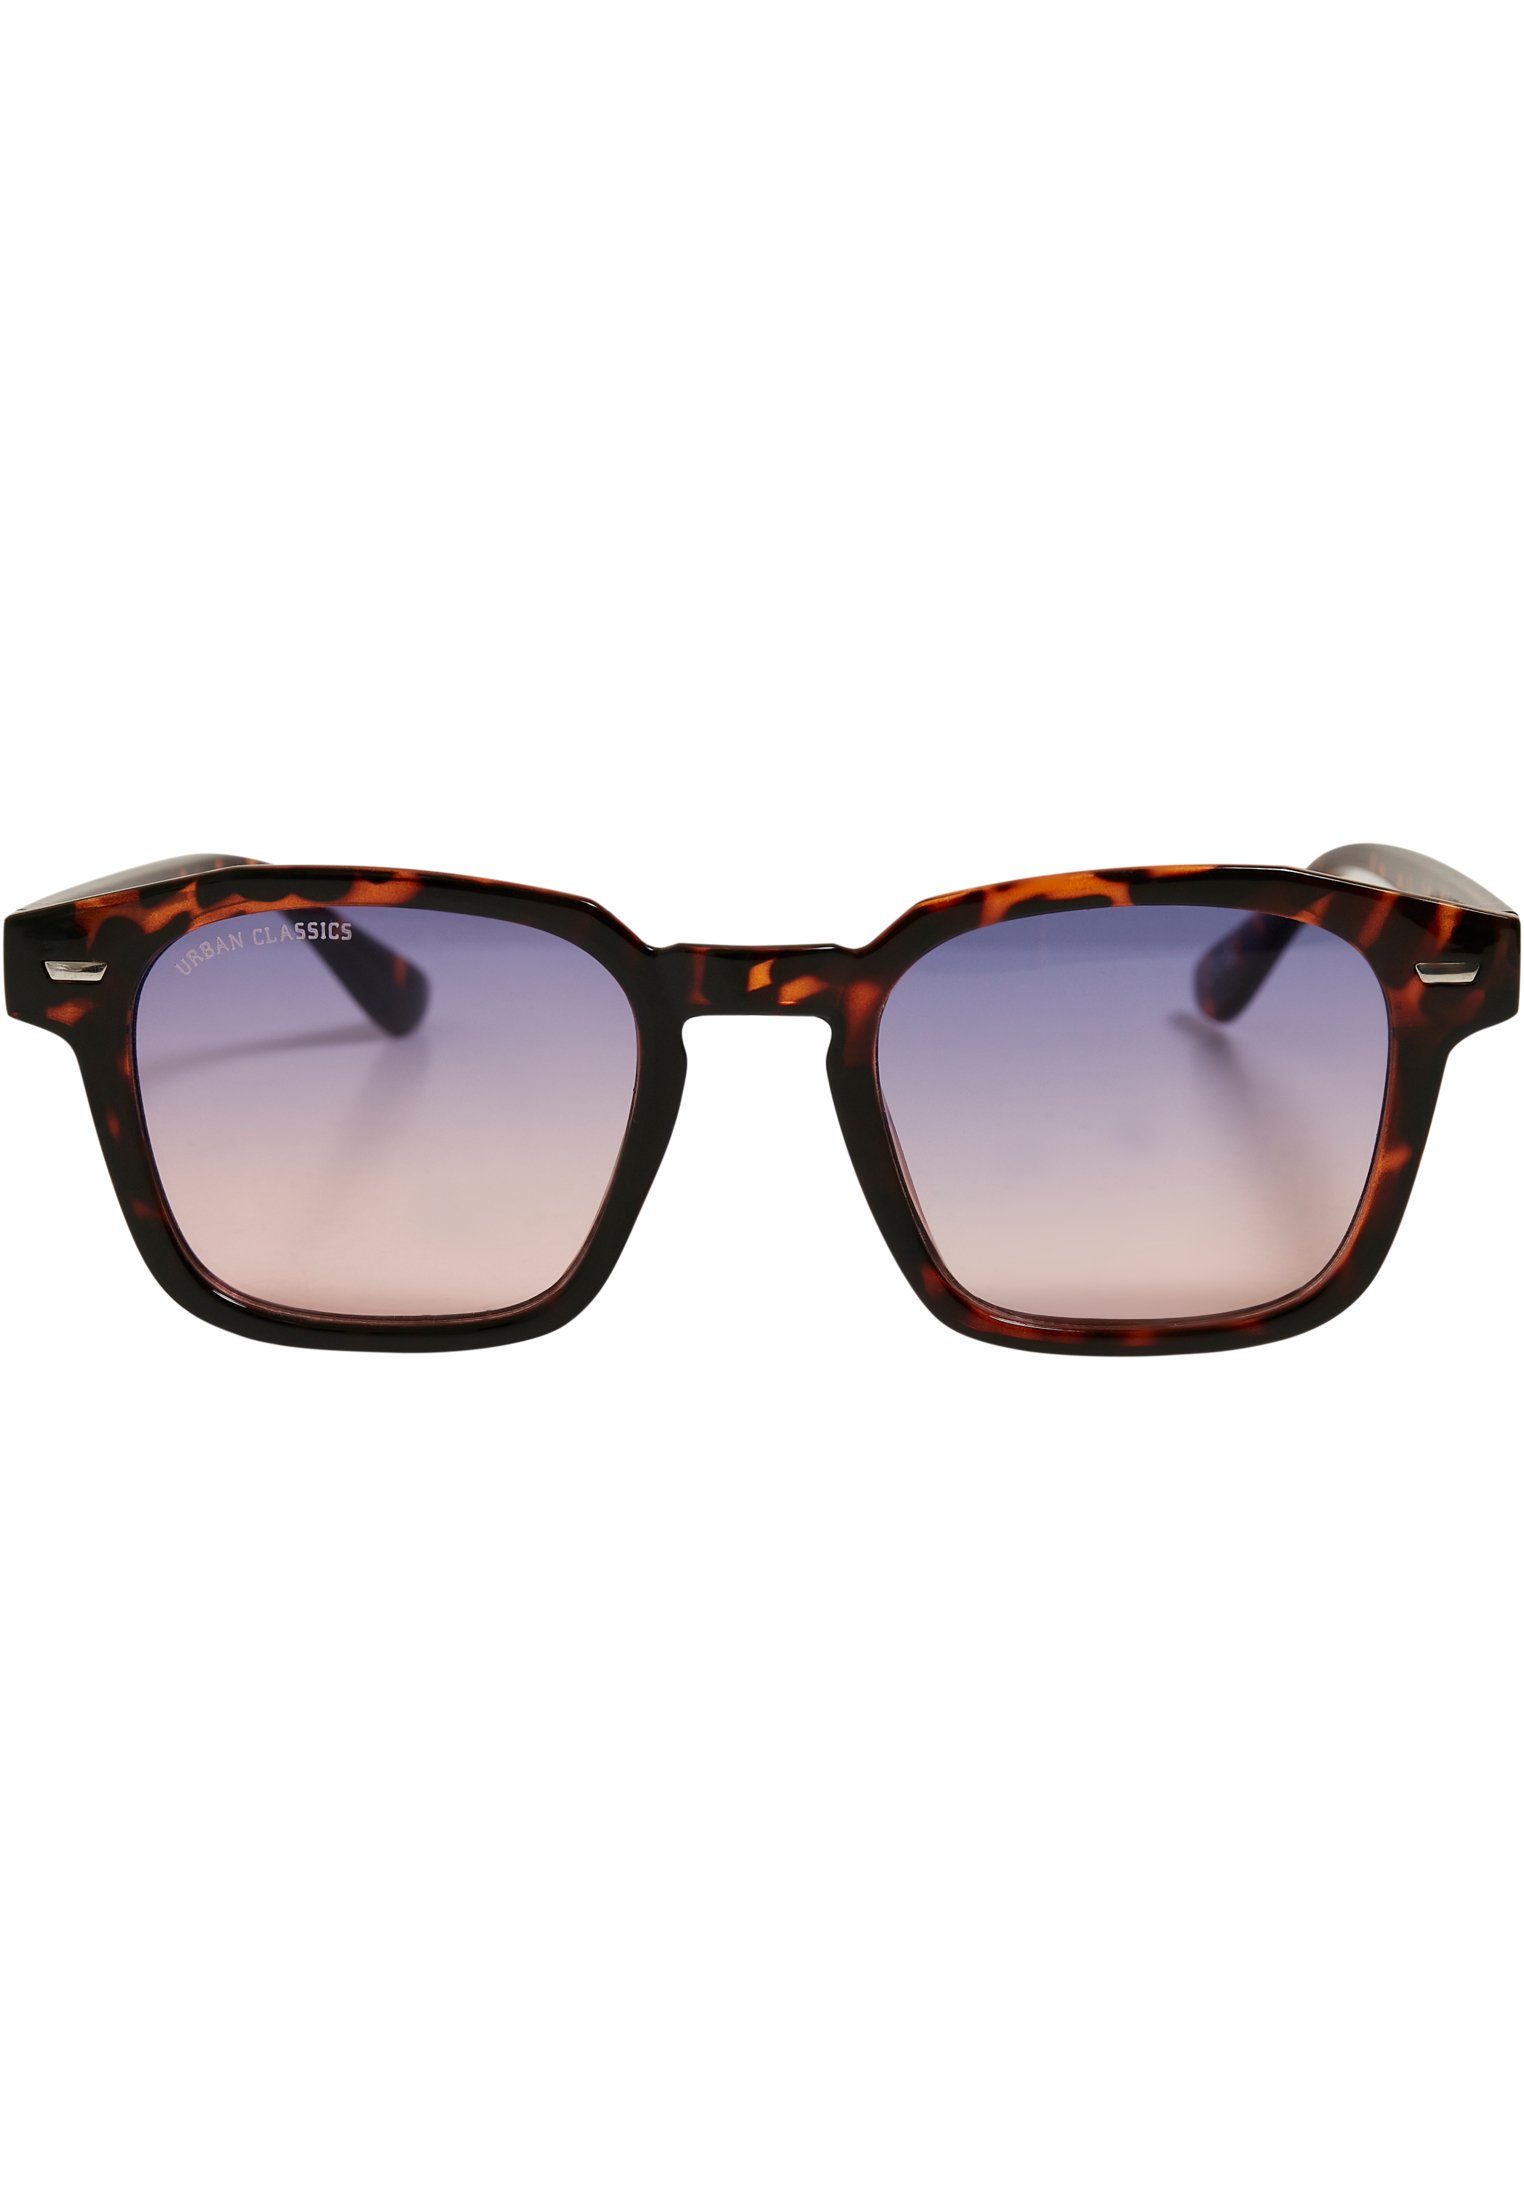 With amber/lilac Maui URBAN Sonnenbrille Unisex CLASSICS Sunglasses Case